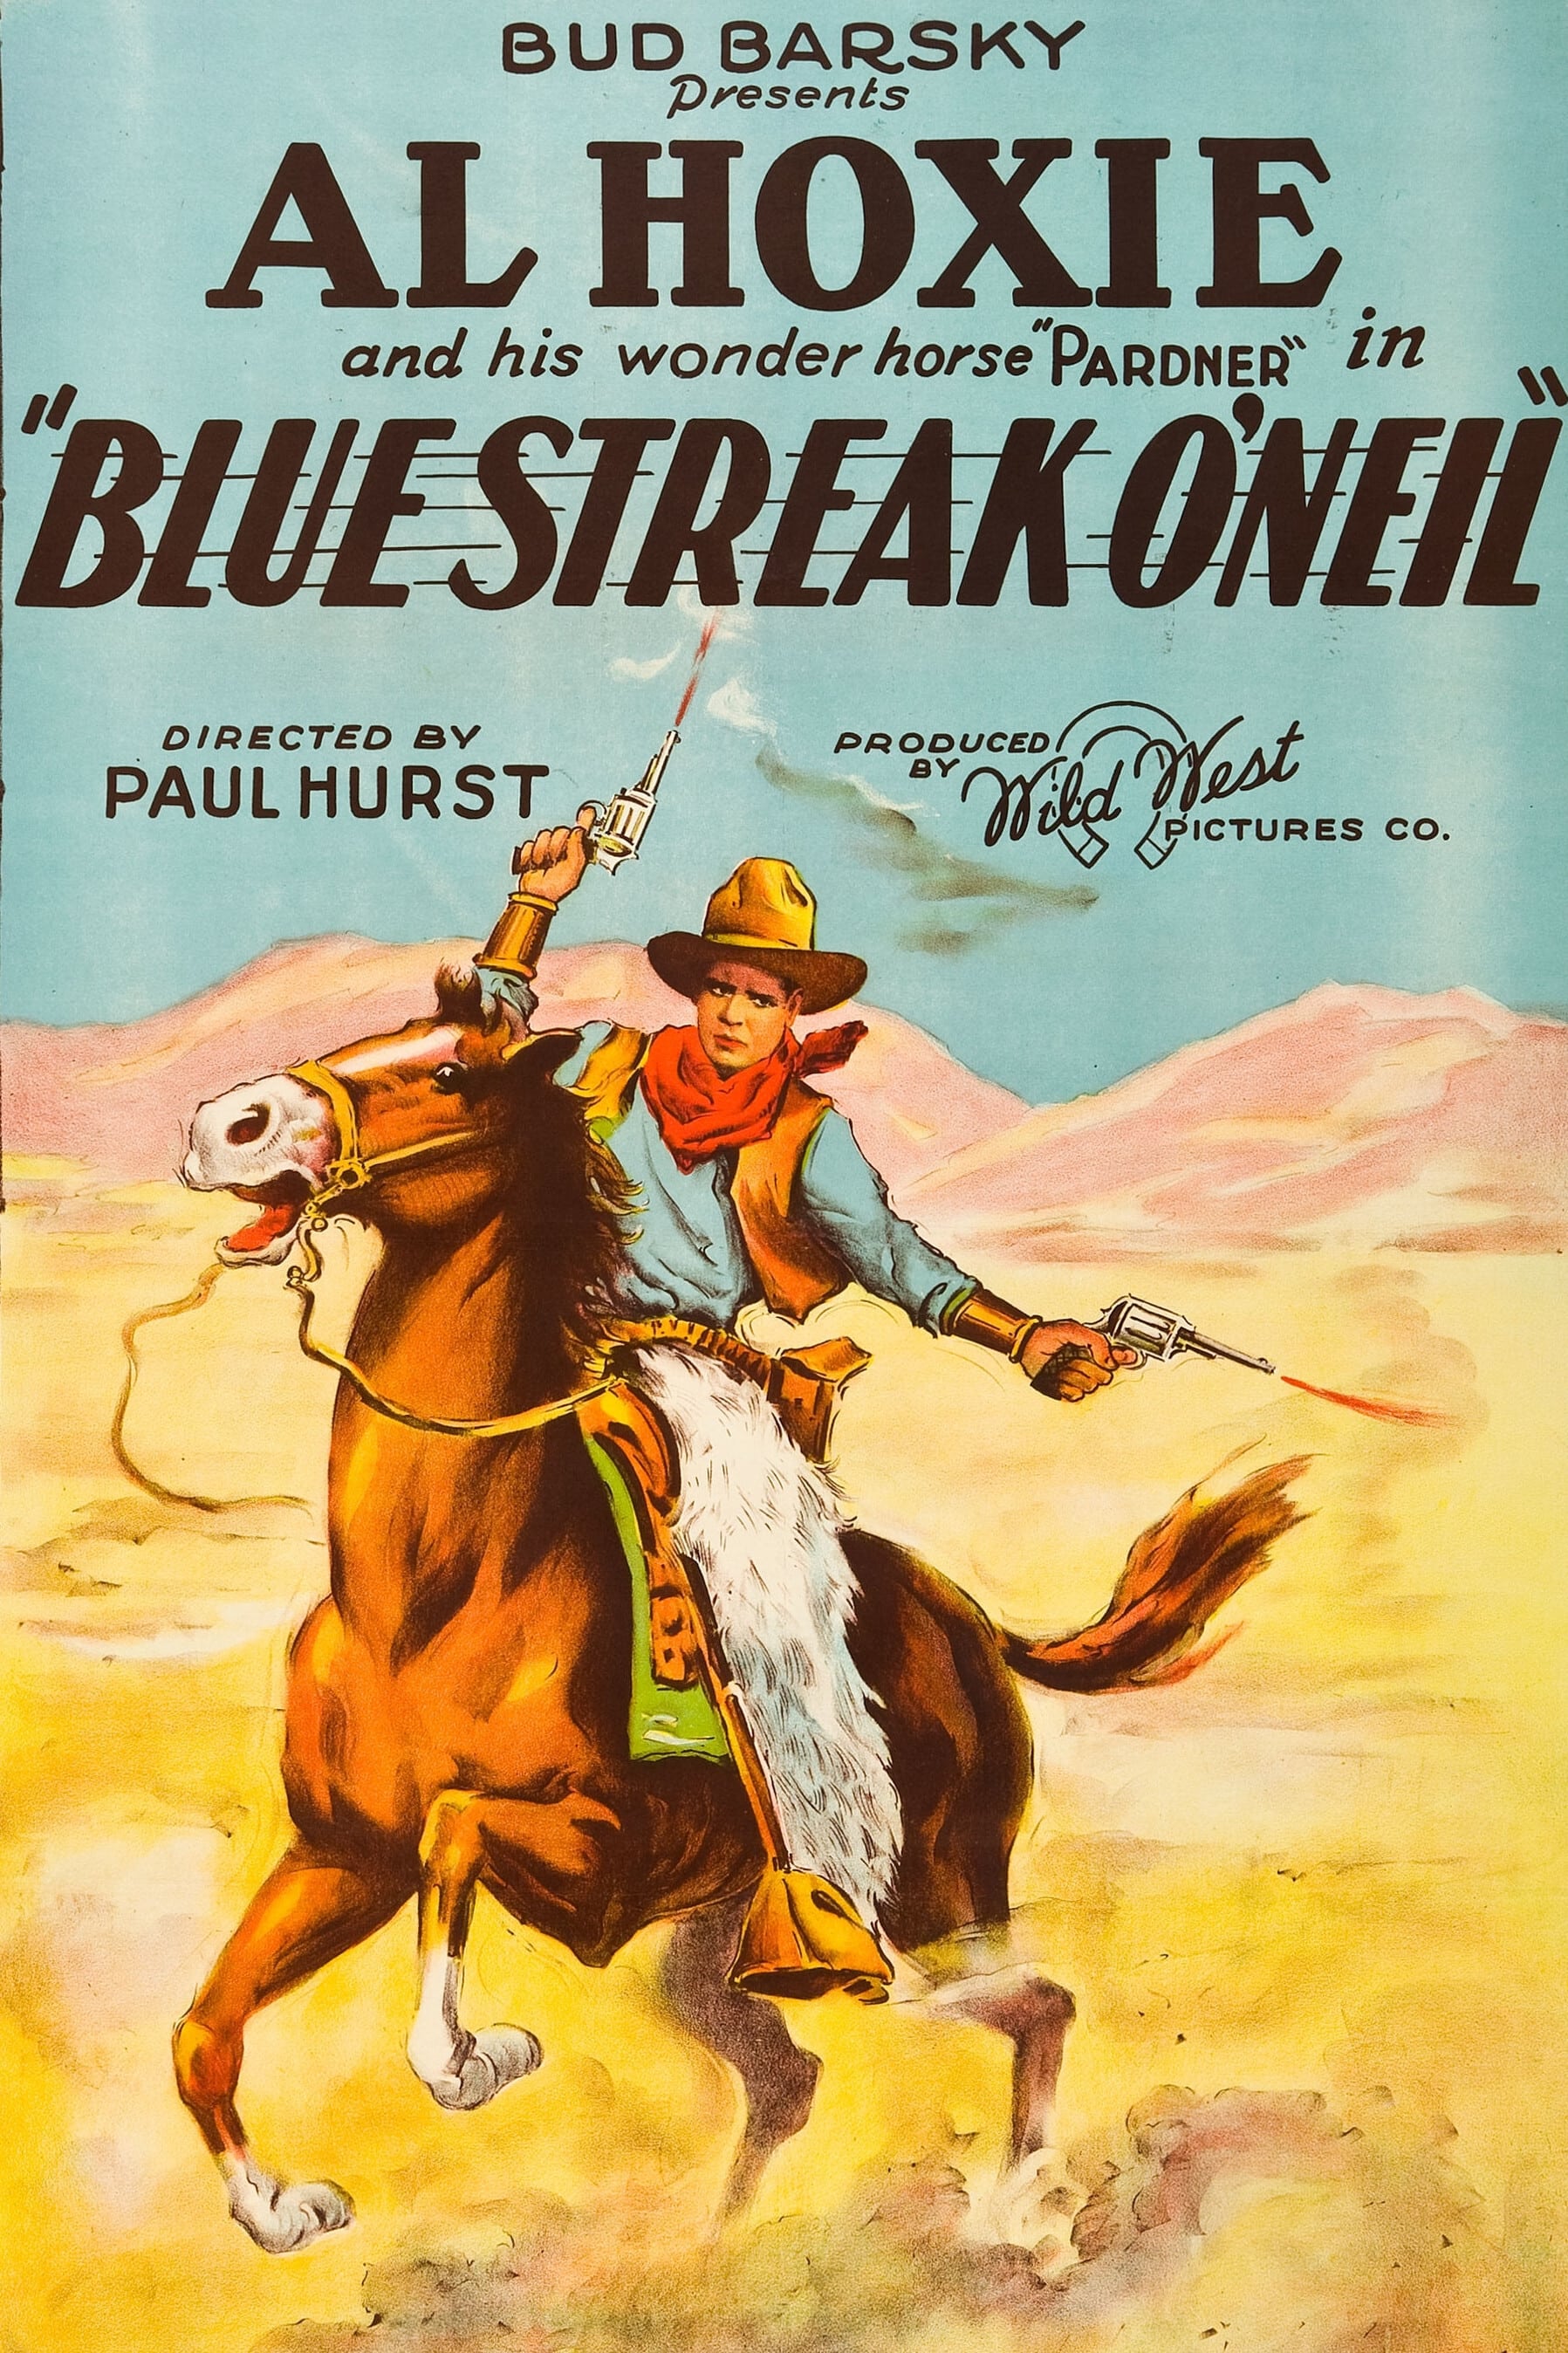 Blue Streak O'Neil